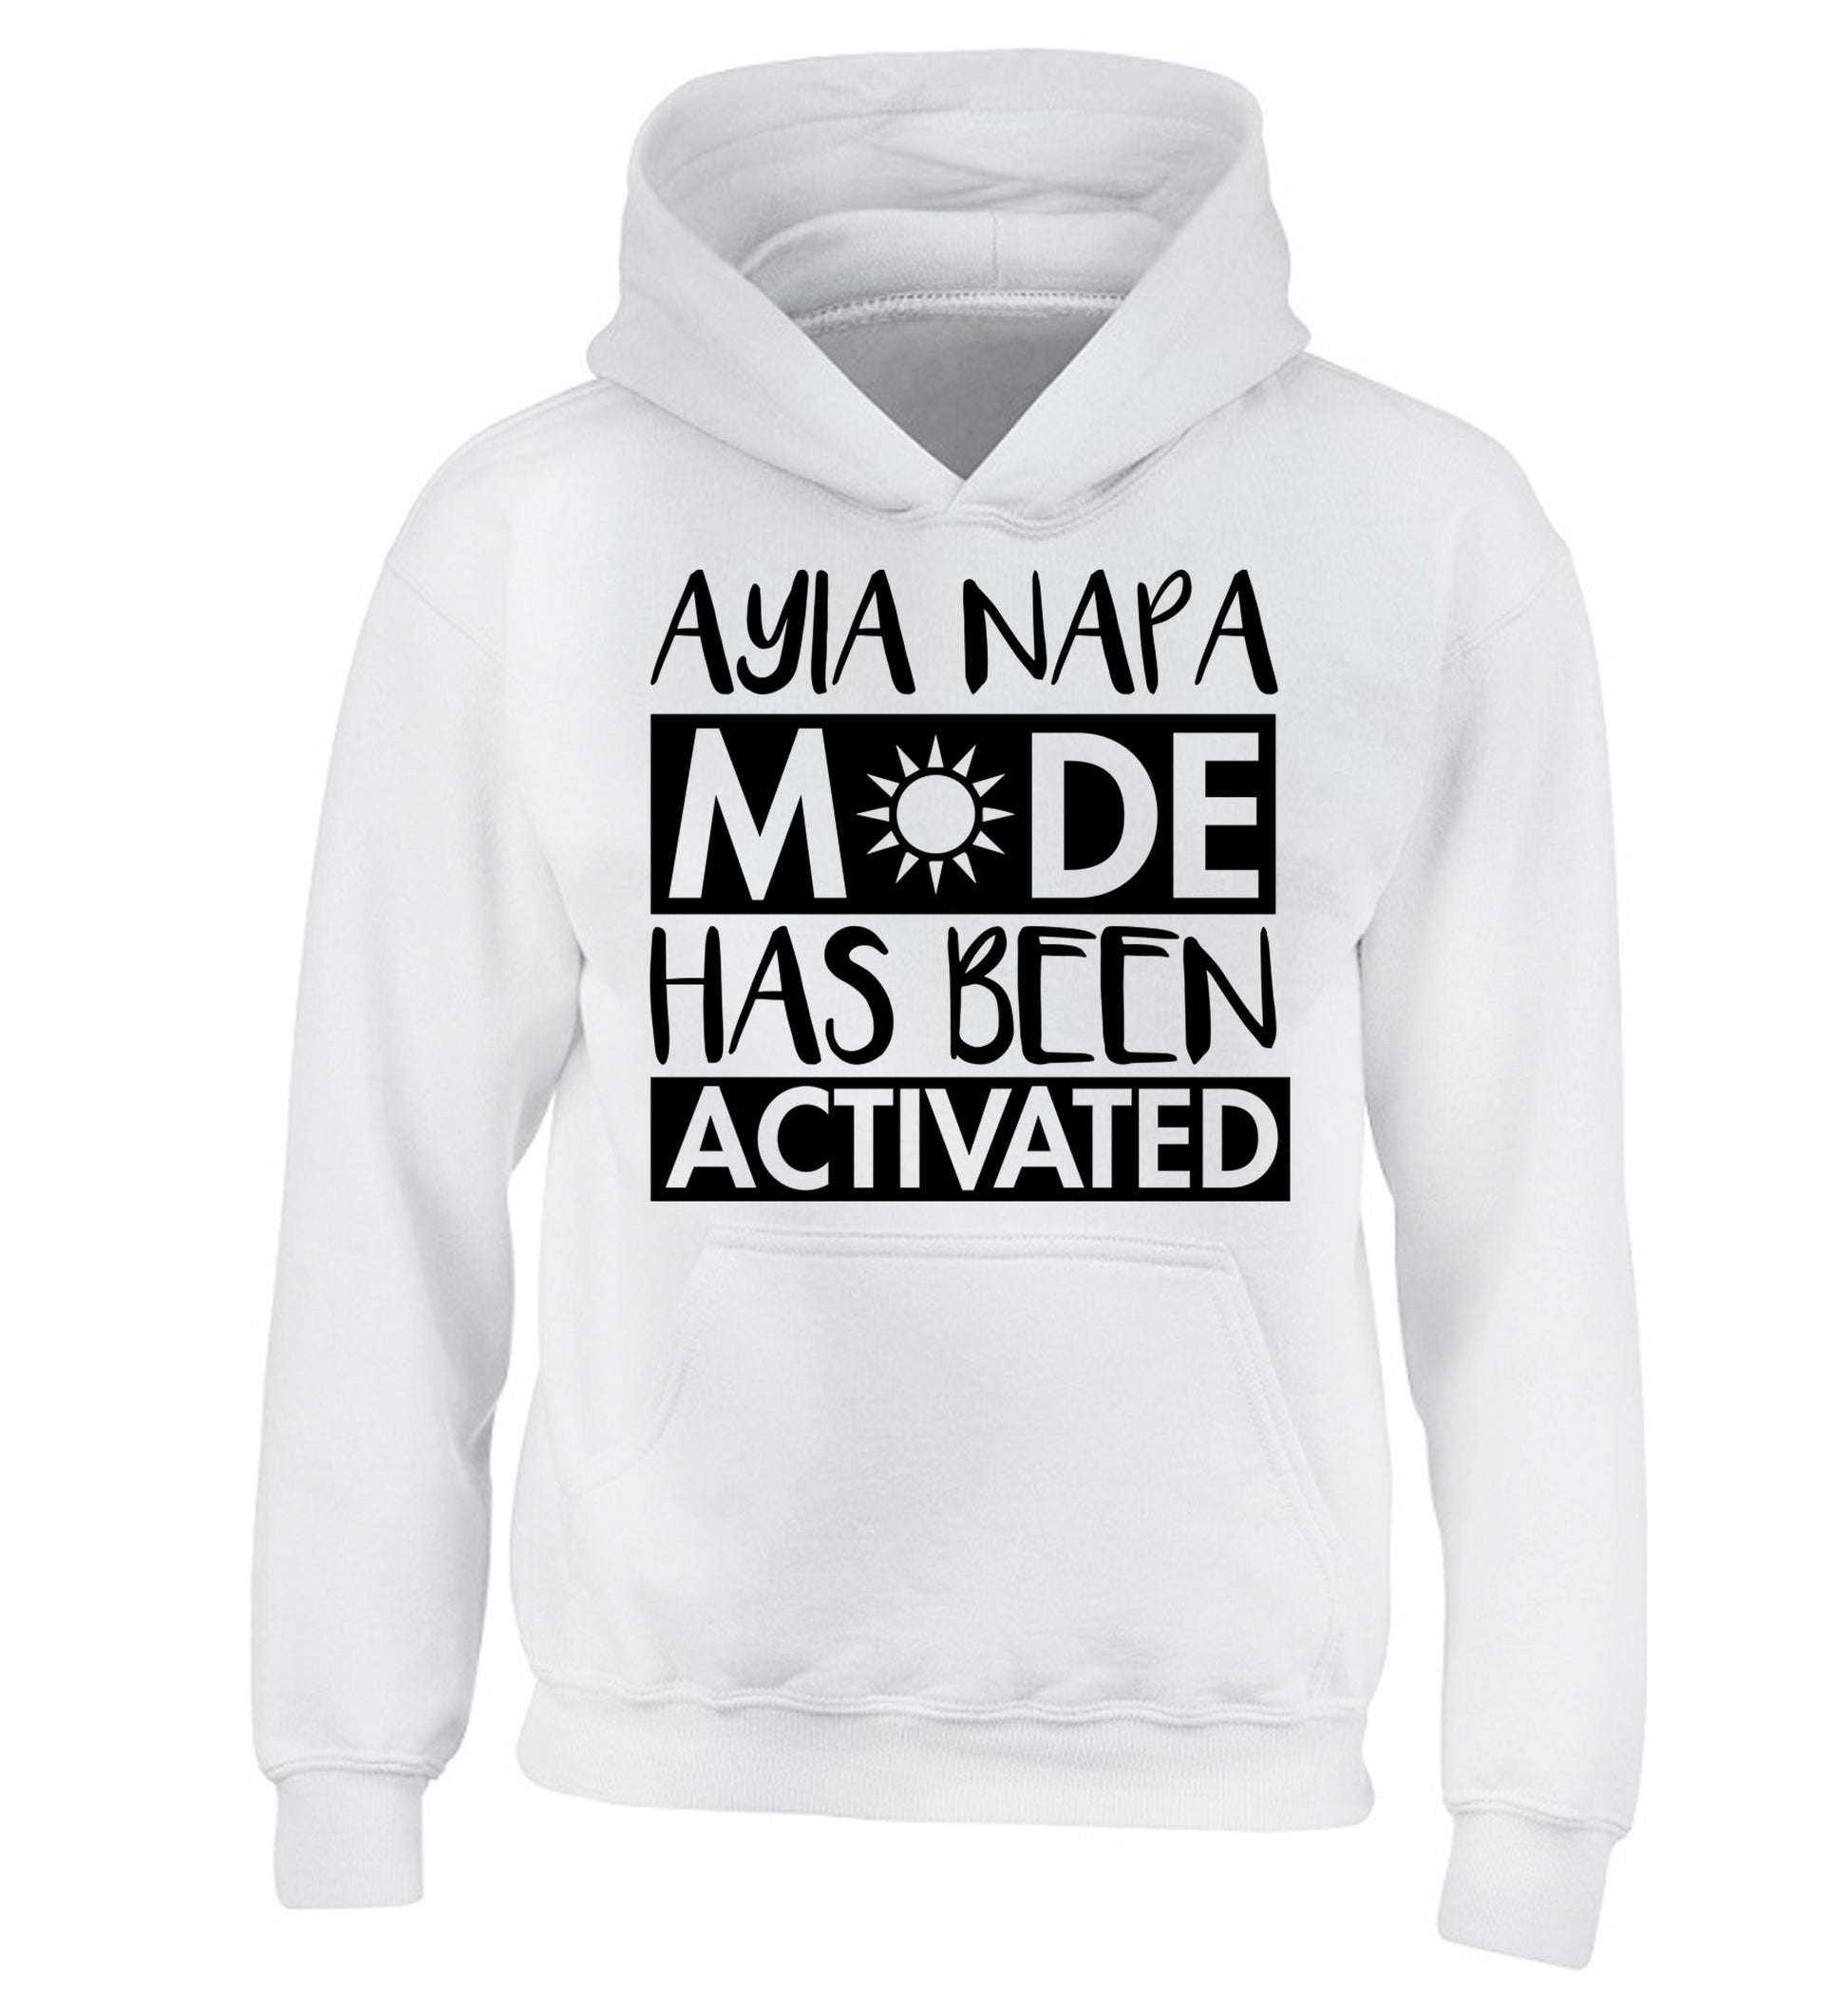 Aiya Napa mode has been activated children's white hoodie 12-14 Years